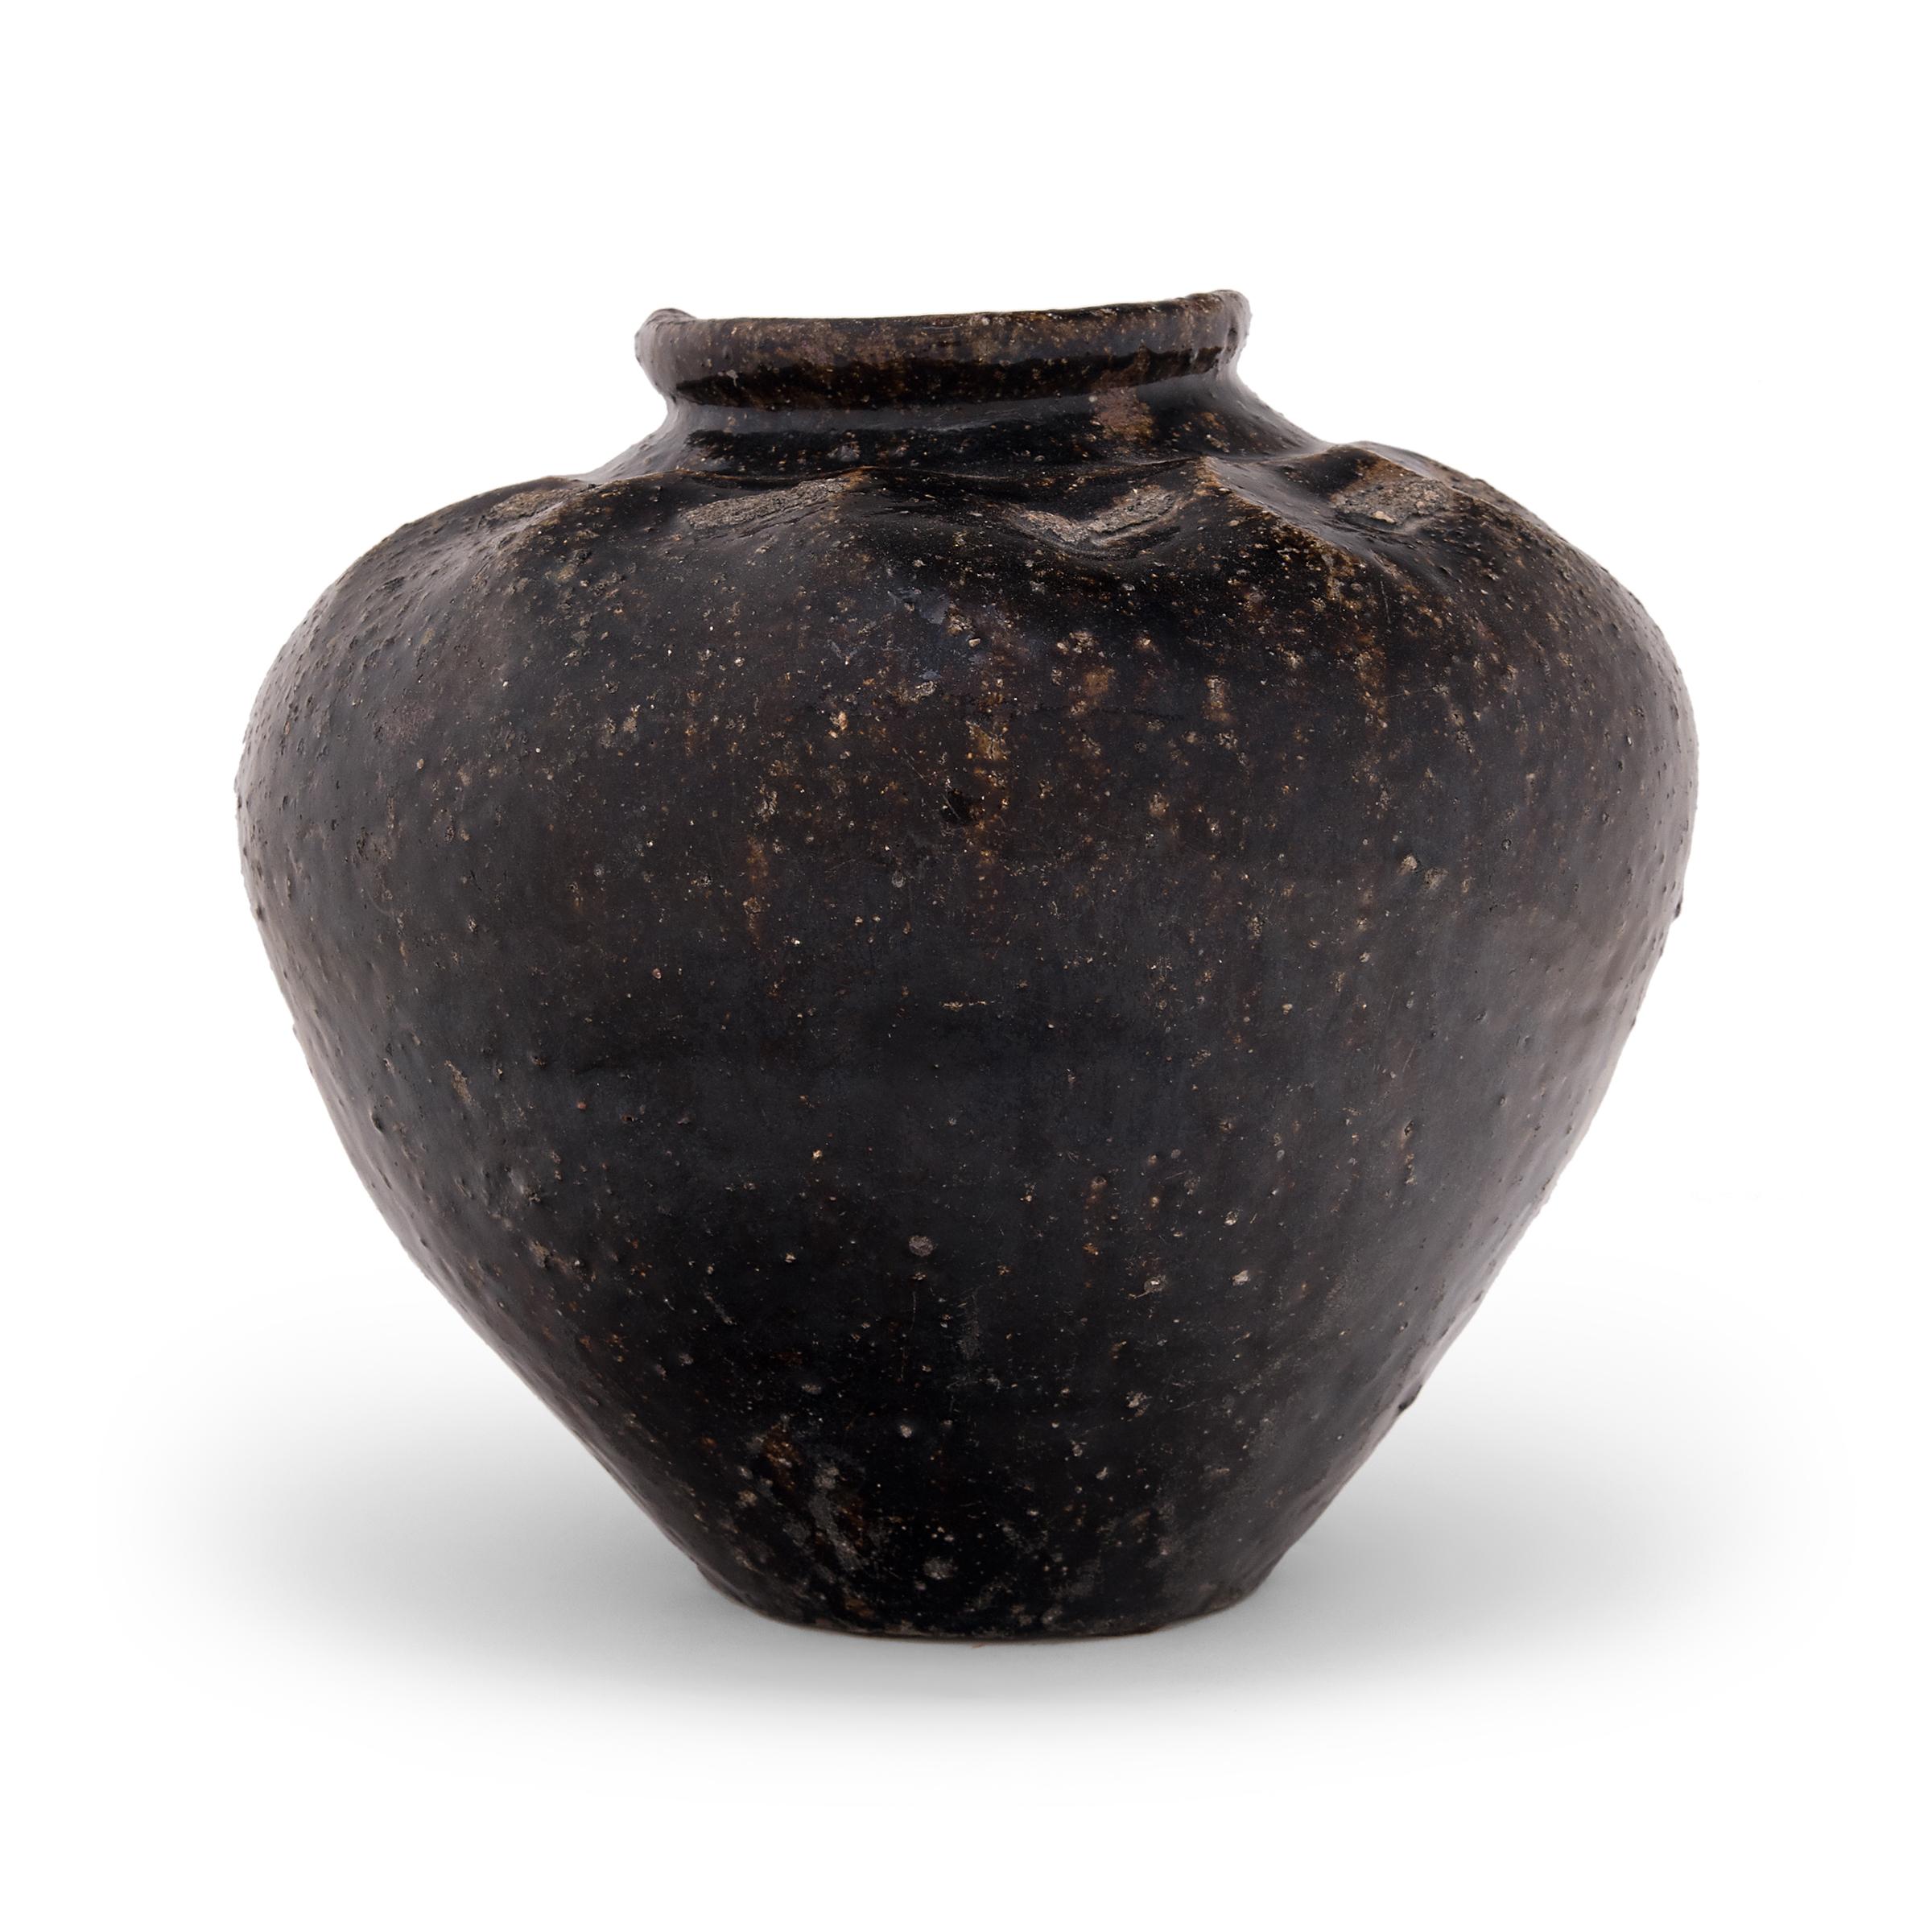 Qing Provincial Chinese Salt Jar, c. 1900